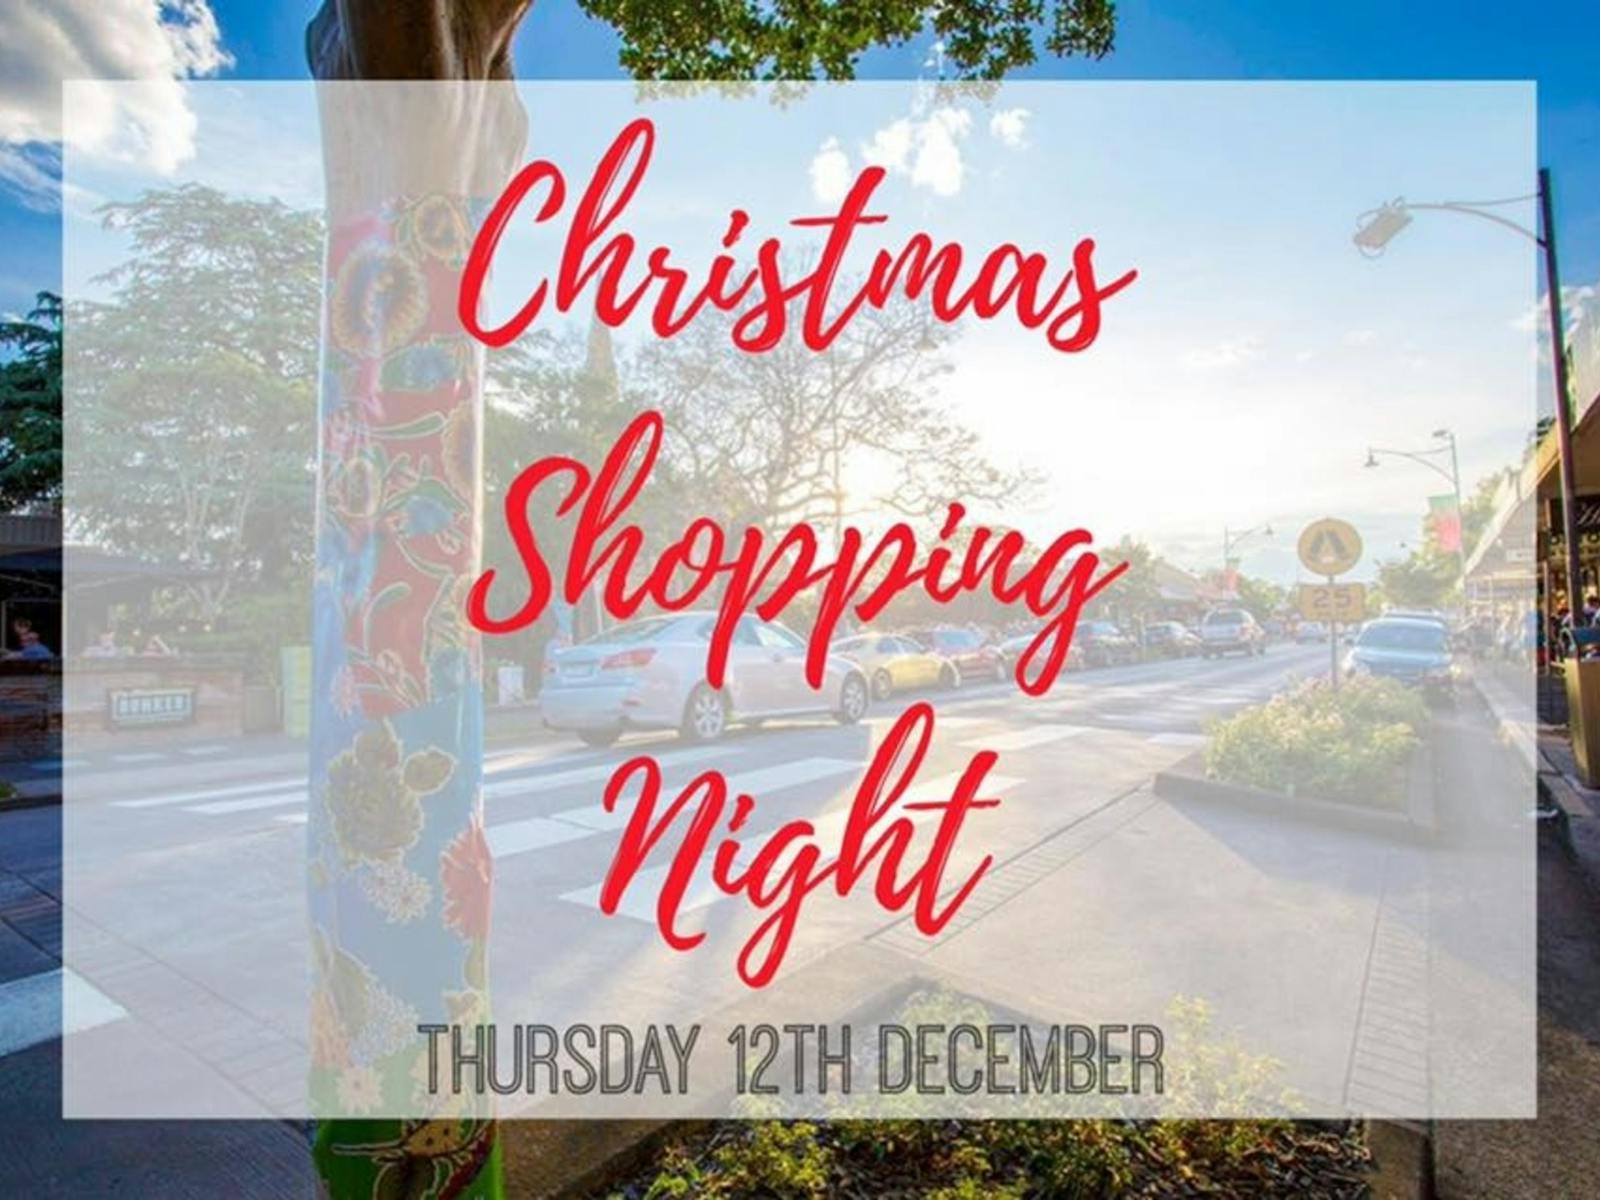 Image for Springwood Christmas Shopping Night